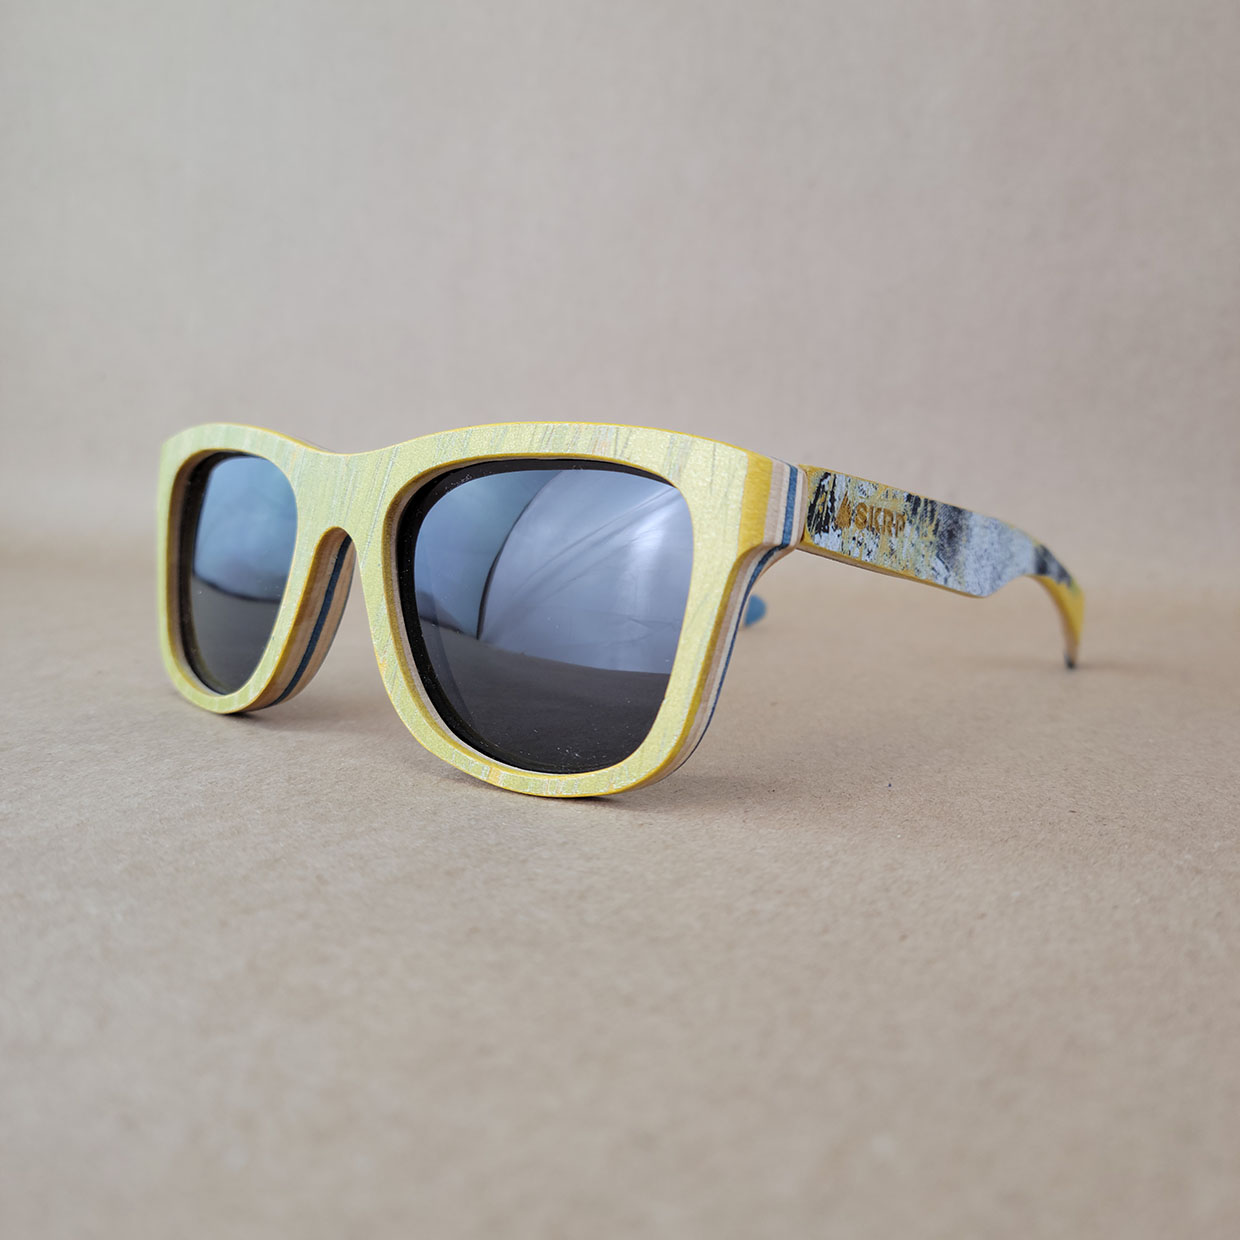 Recycled Wooden Skateboard Sunglasses (Wayfarer style)